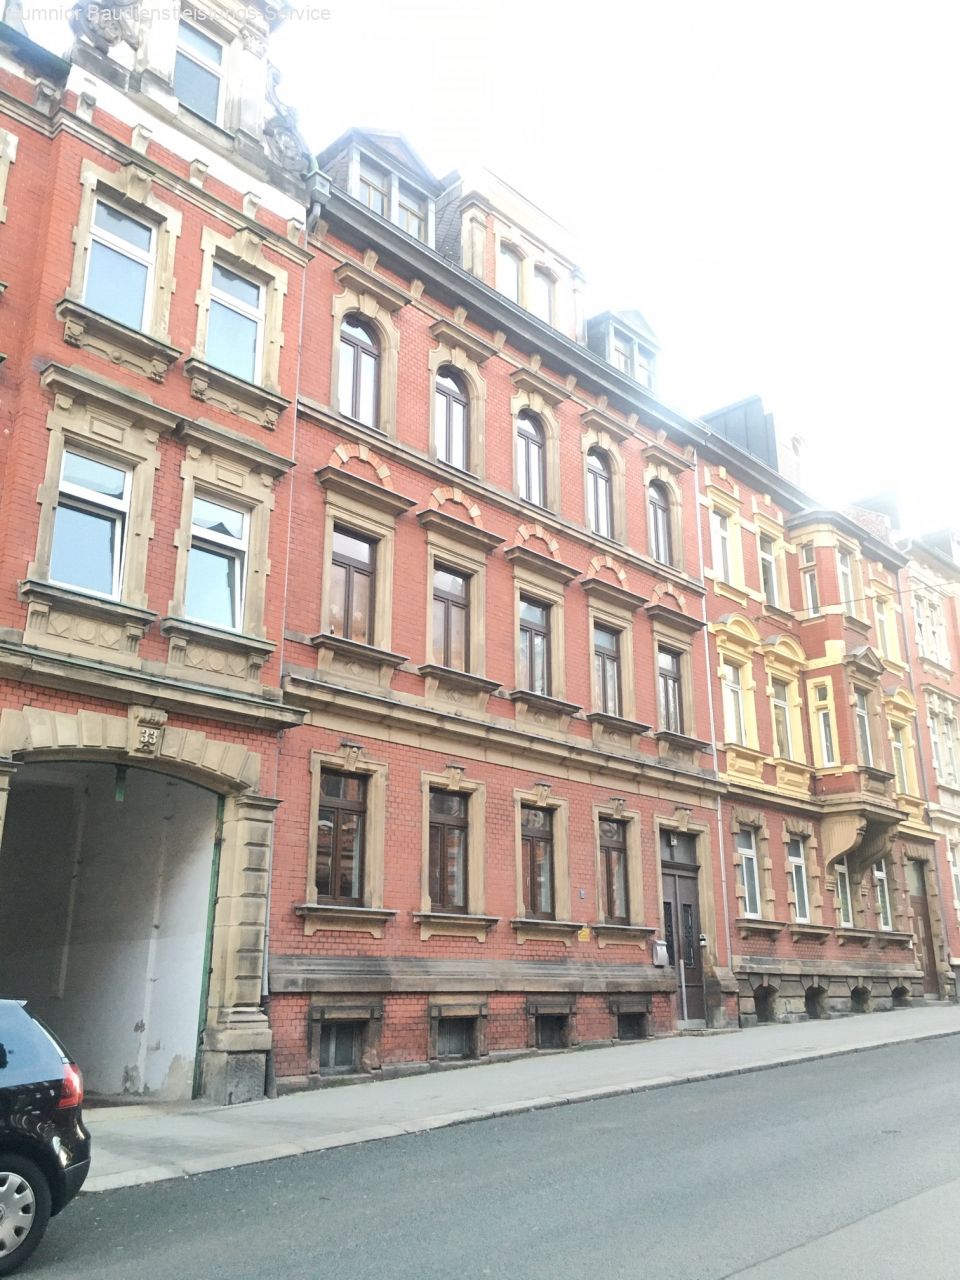 Marienstraße